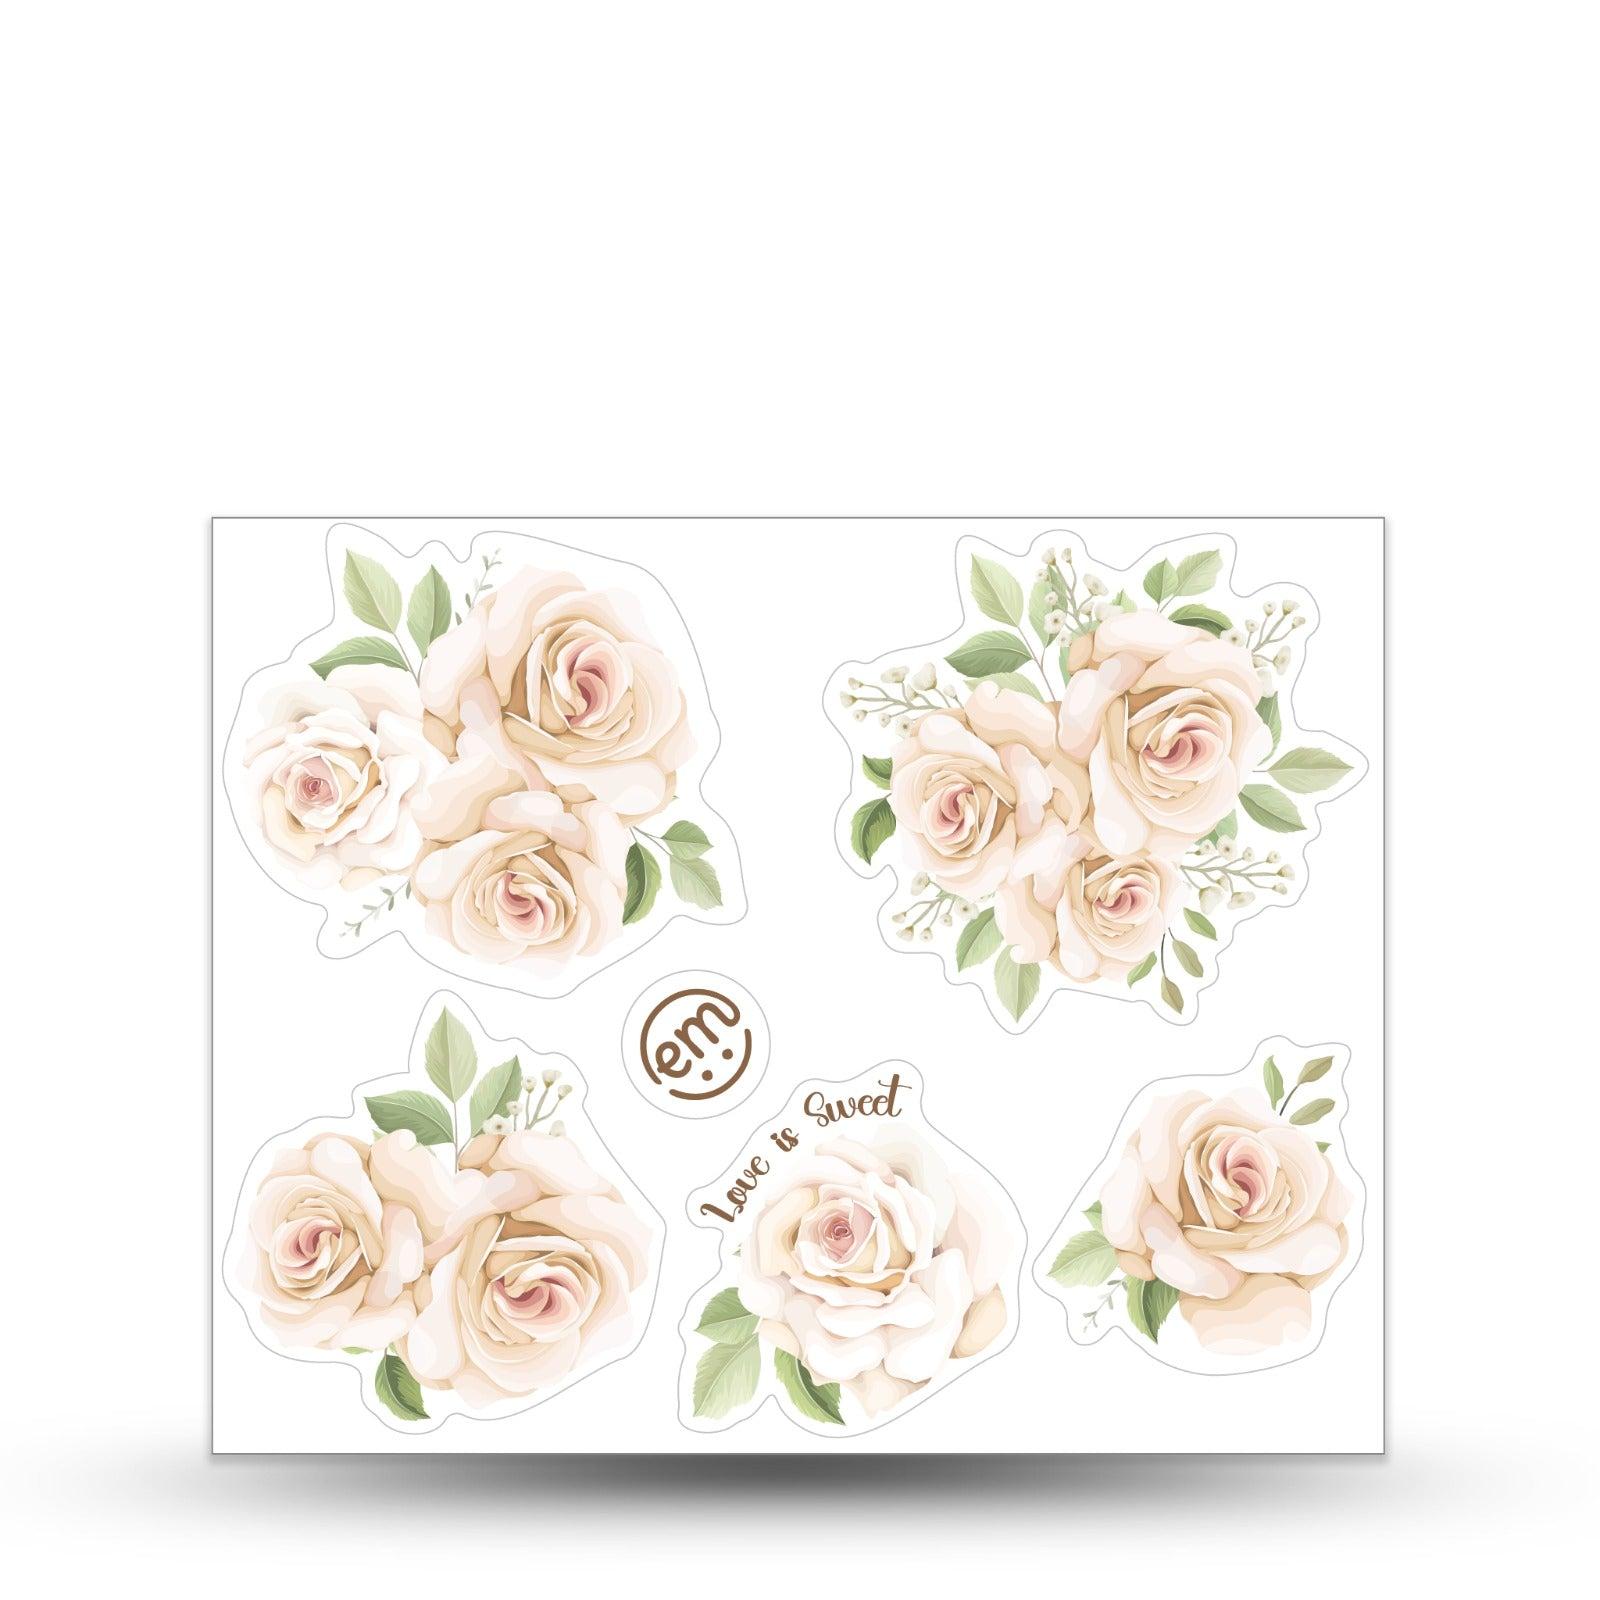 Wedding Bouquet Decal Sticker Sheet, Individual Stickers White Pink Floral Design